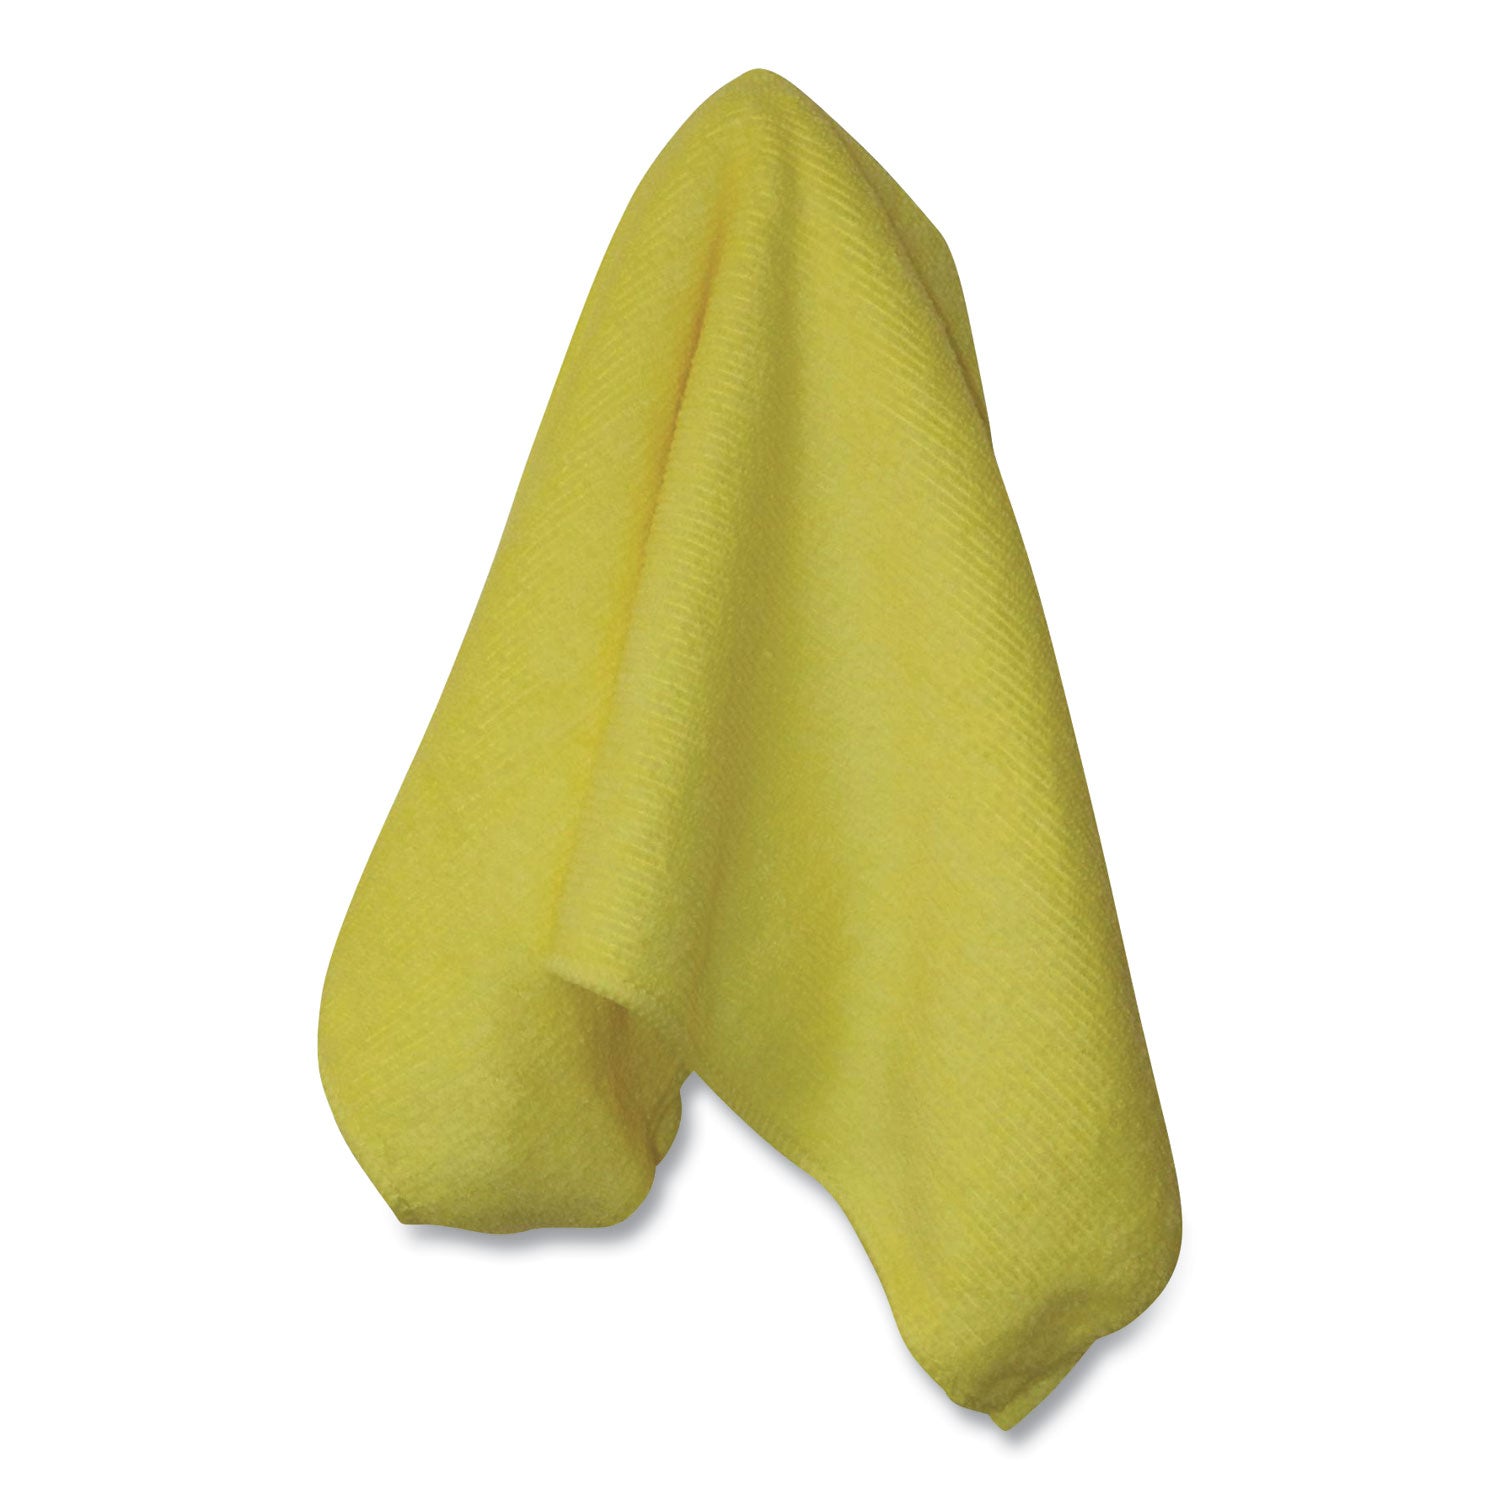 premium-weight-microfiber-dry-cloths-16-x-16-yellow-12-pack_implfk700pk - 1